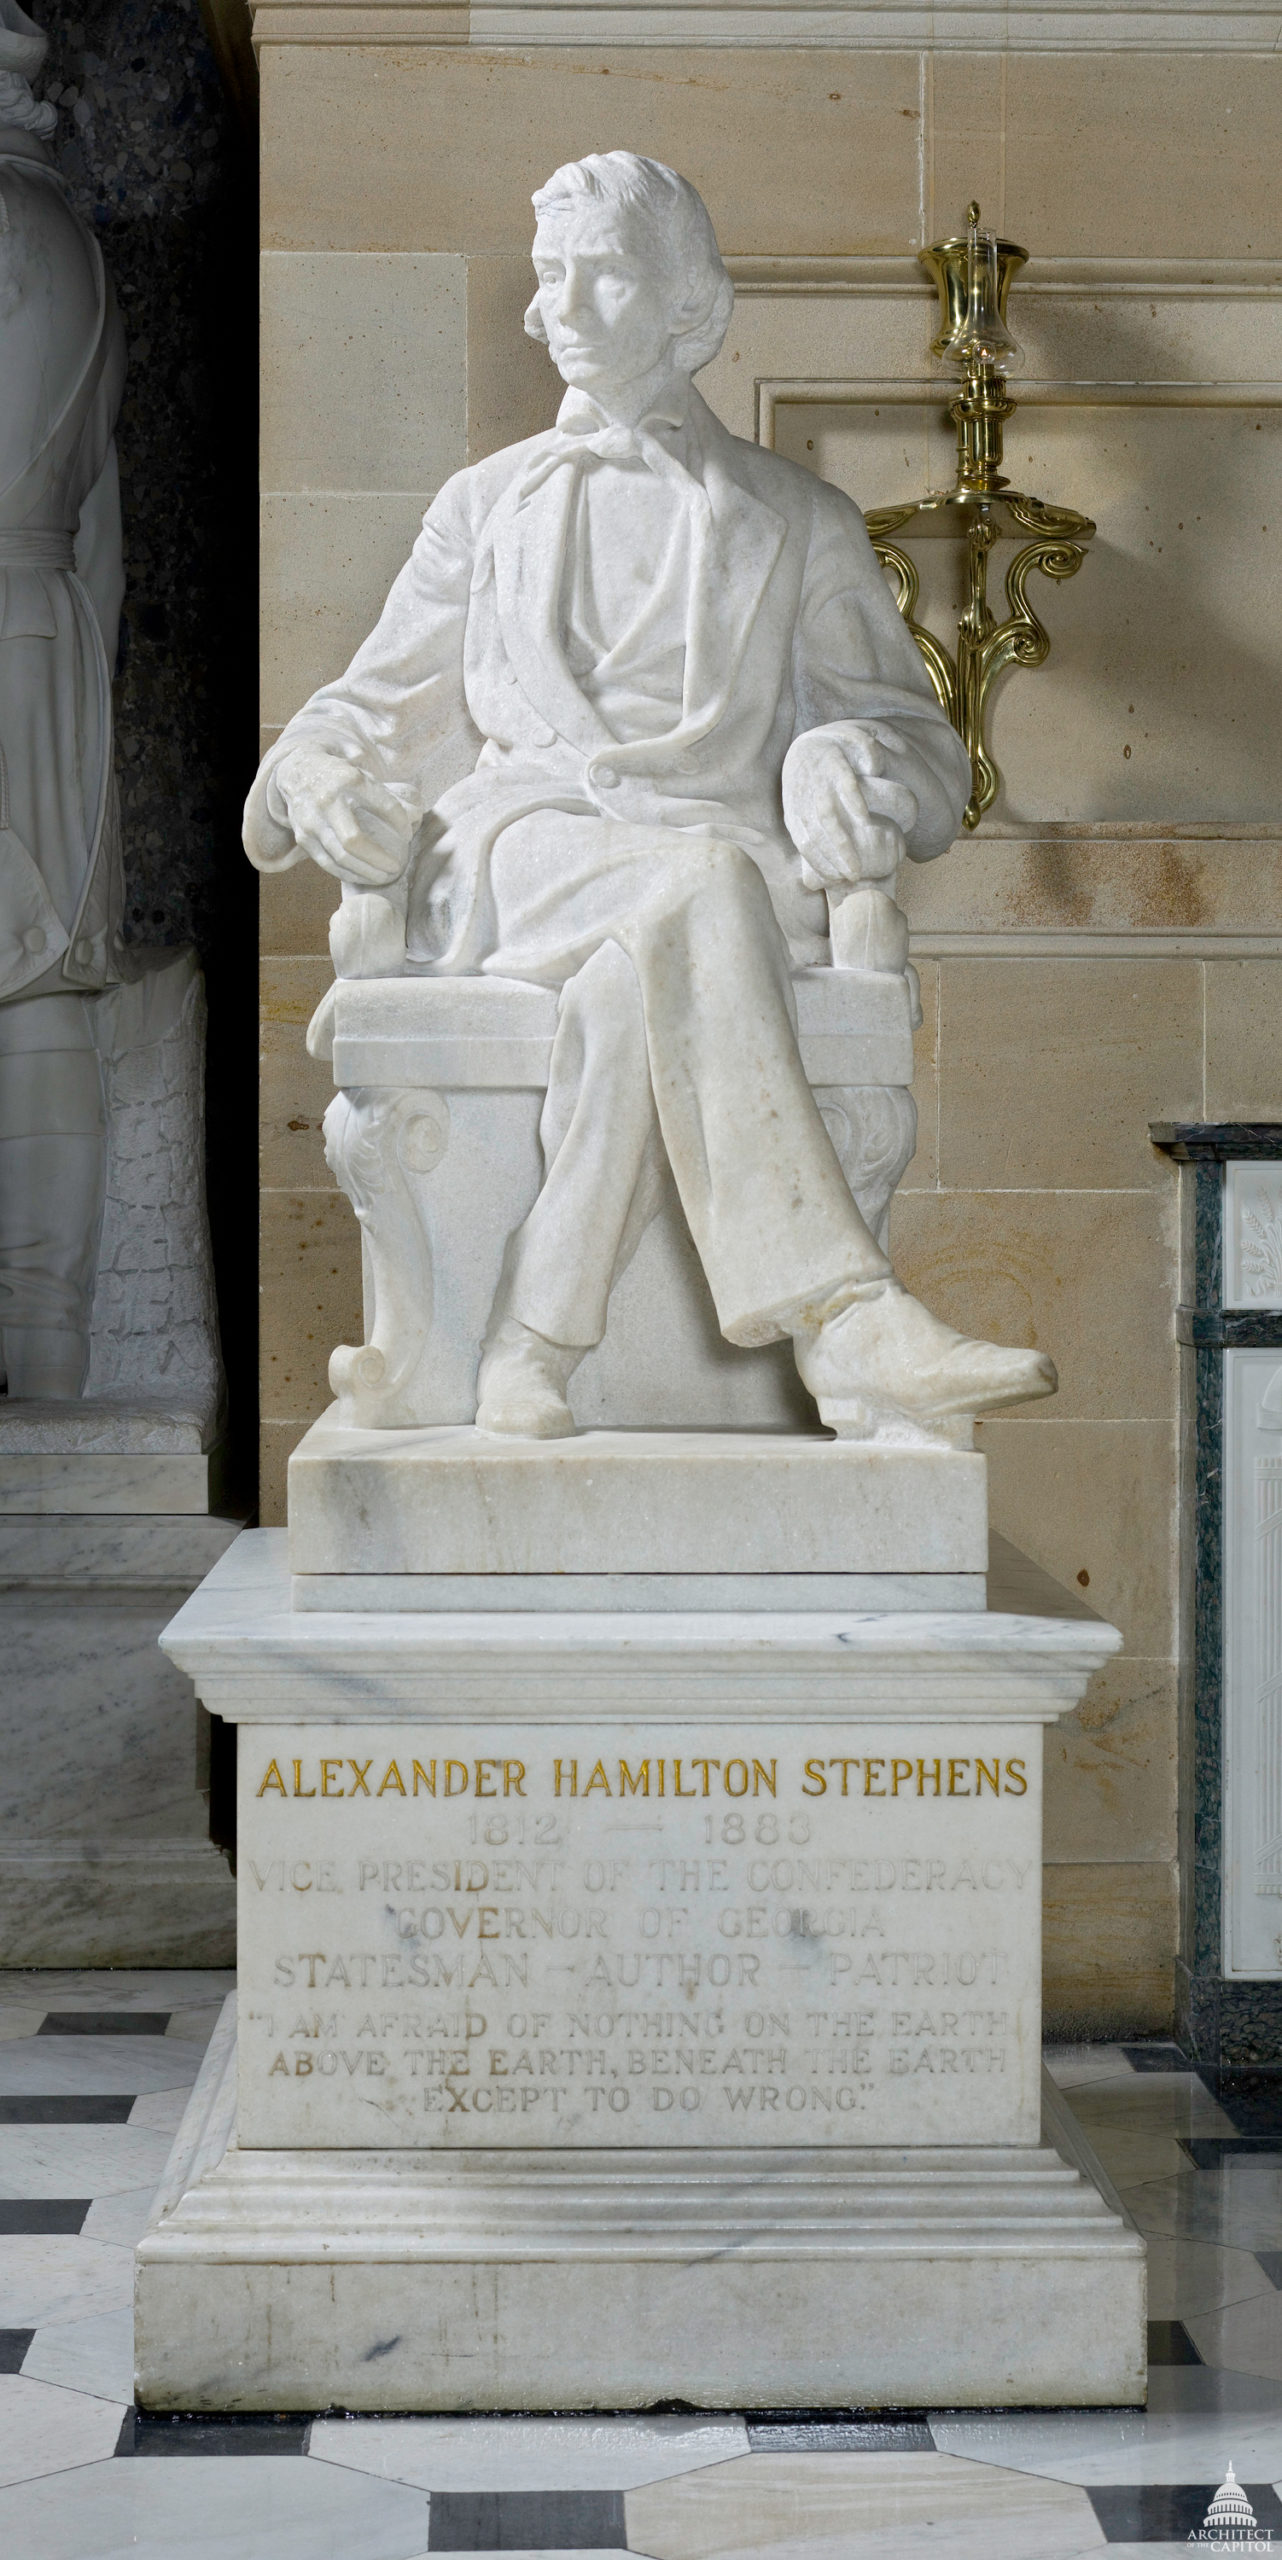 Gutzon Borglum, Alexander Hamilton Stephens, given 1927, National Statuary Hall, U.S. Capitol (photo: Architect of the Capitol)